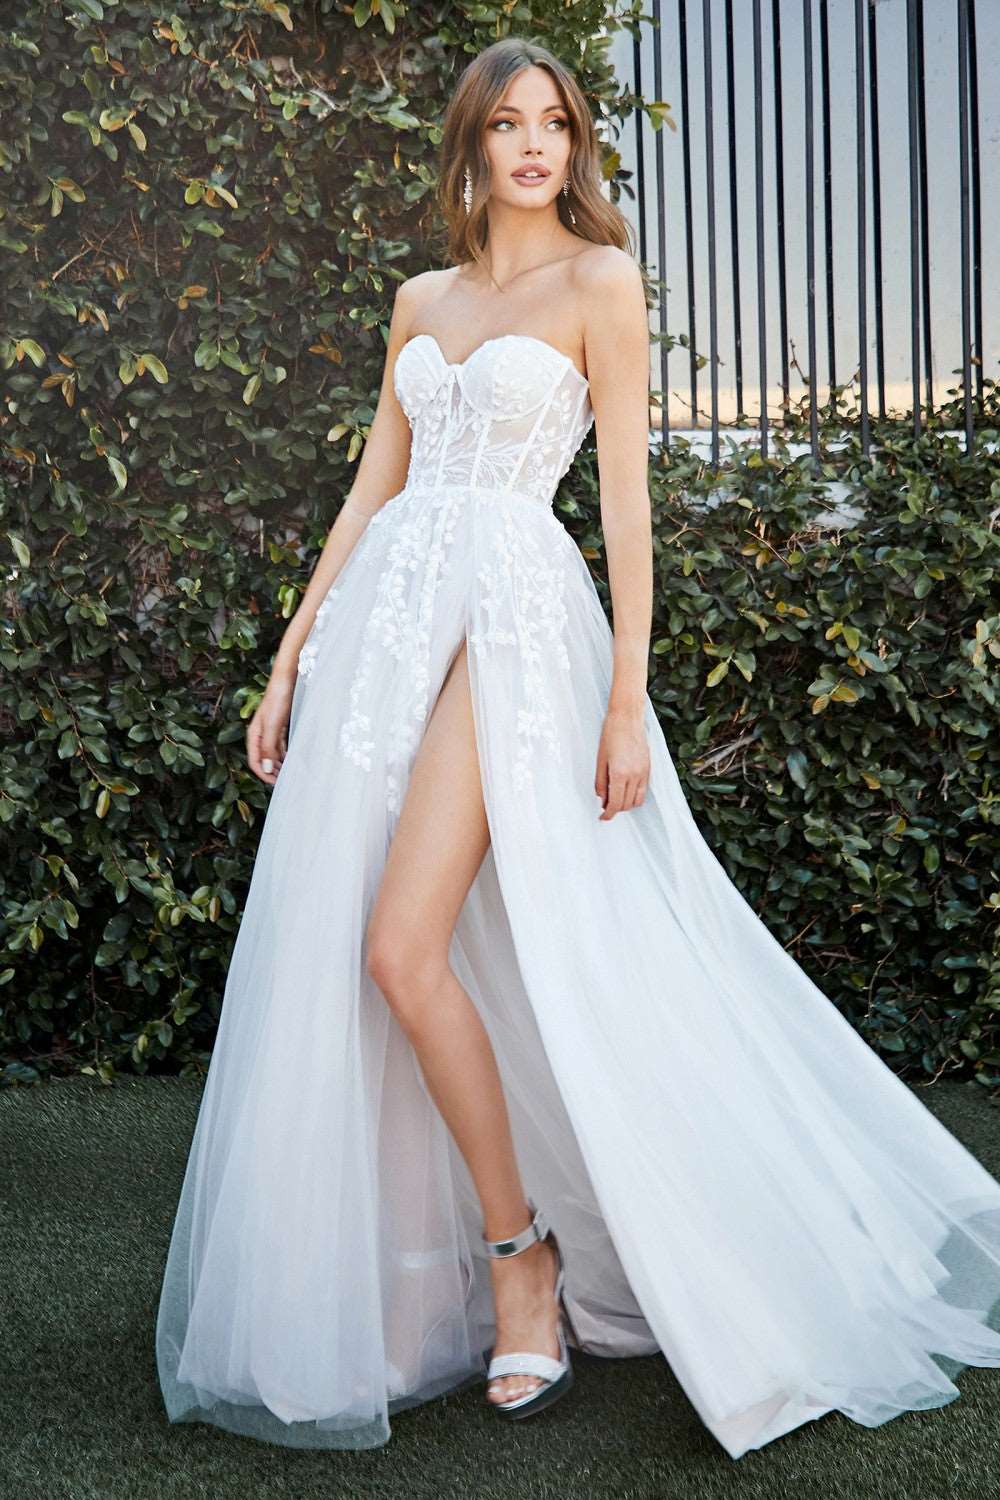 Strapless A-Line Wedding Dress with High Leg Slit